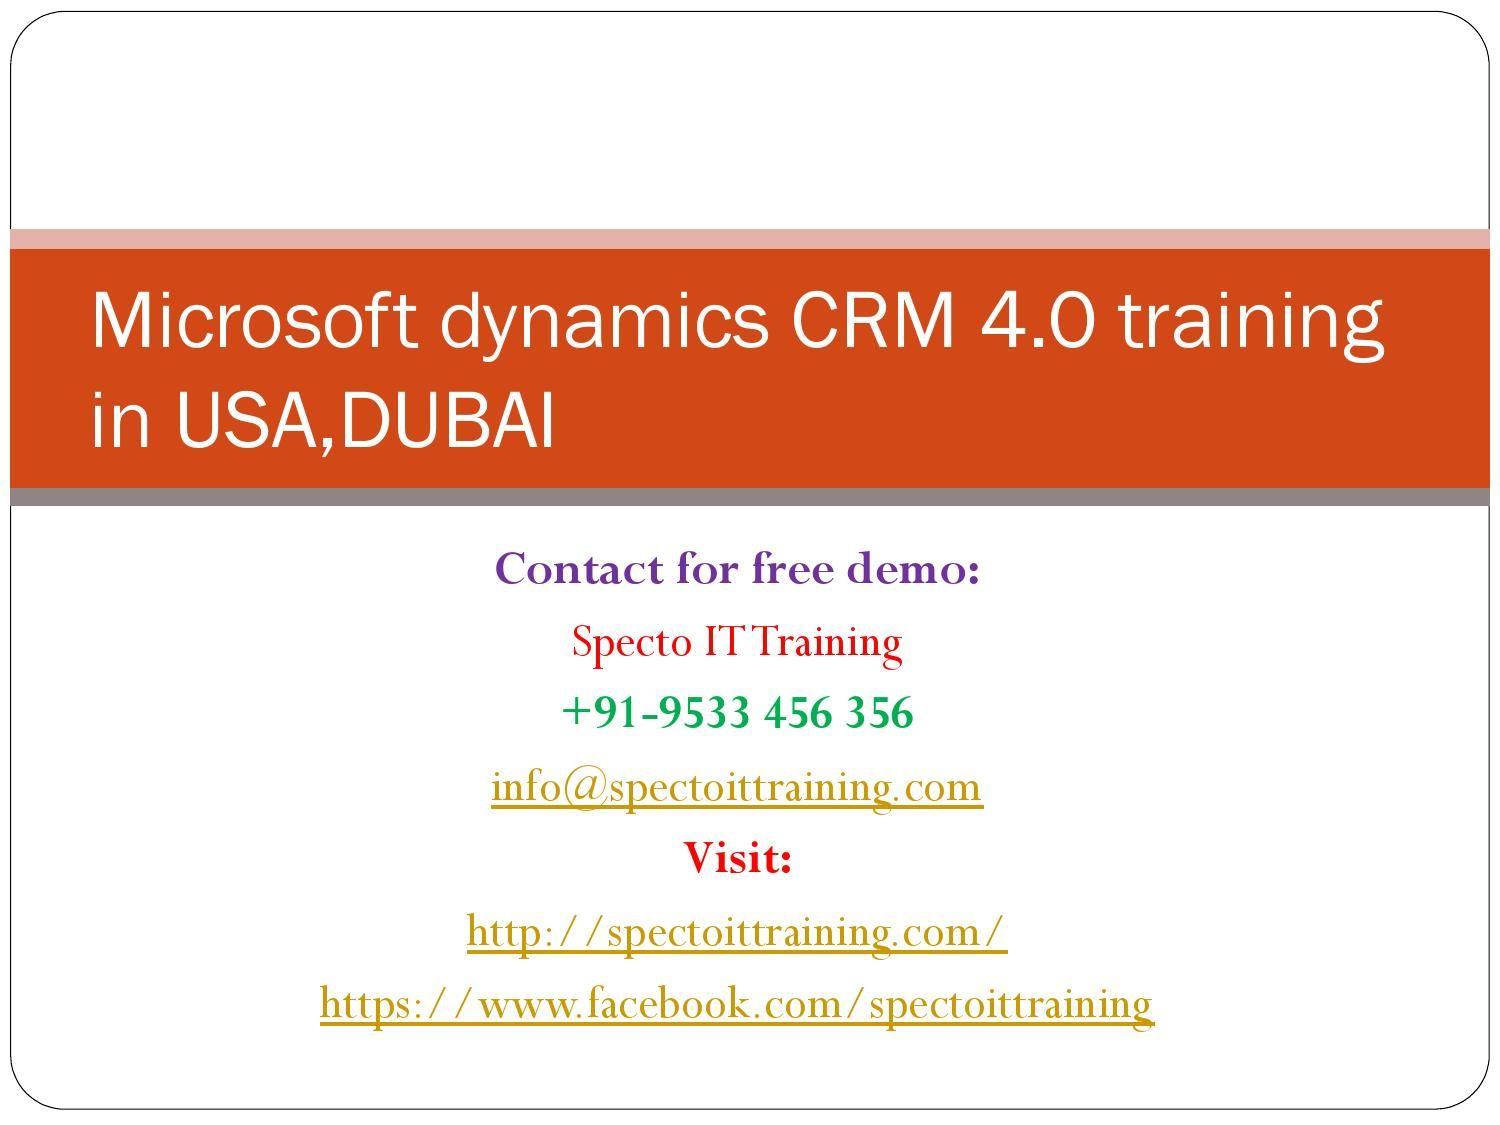 Microsoft Dynamics CRM 4 0 Logo - Microsoft dynamics crm 4 0 training in usa dubai